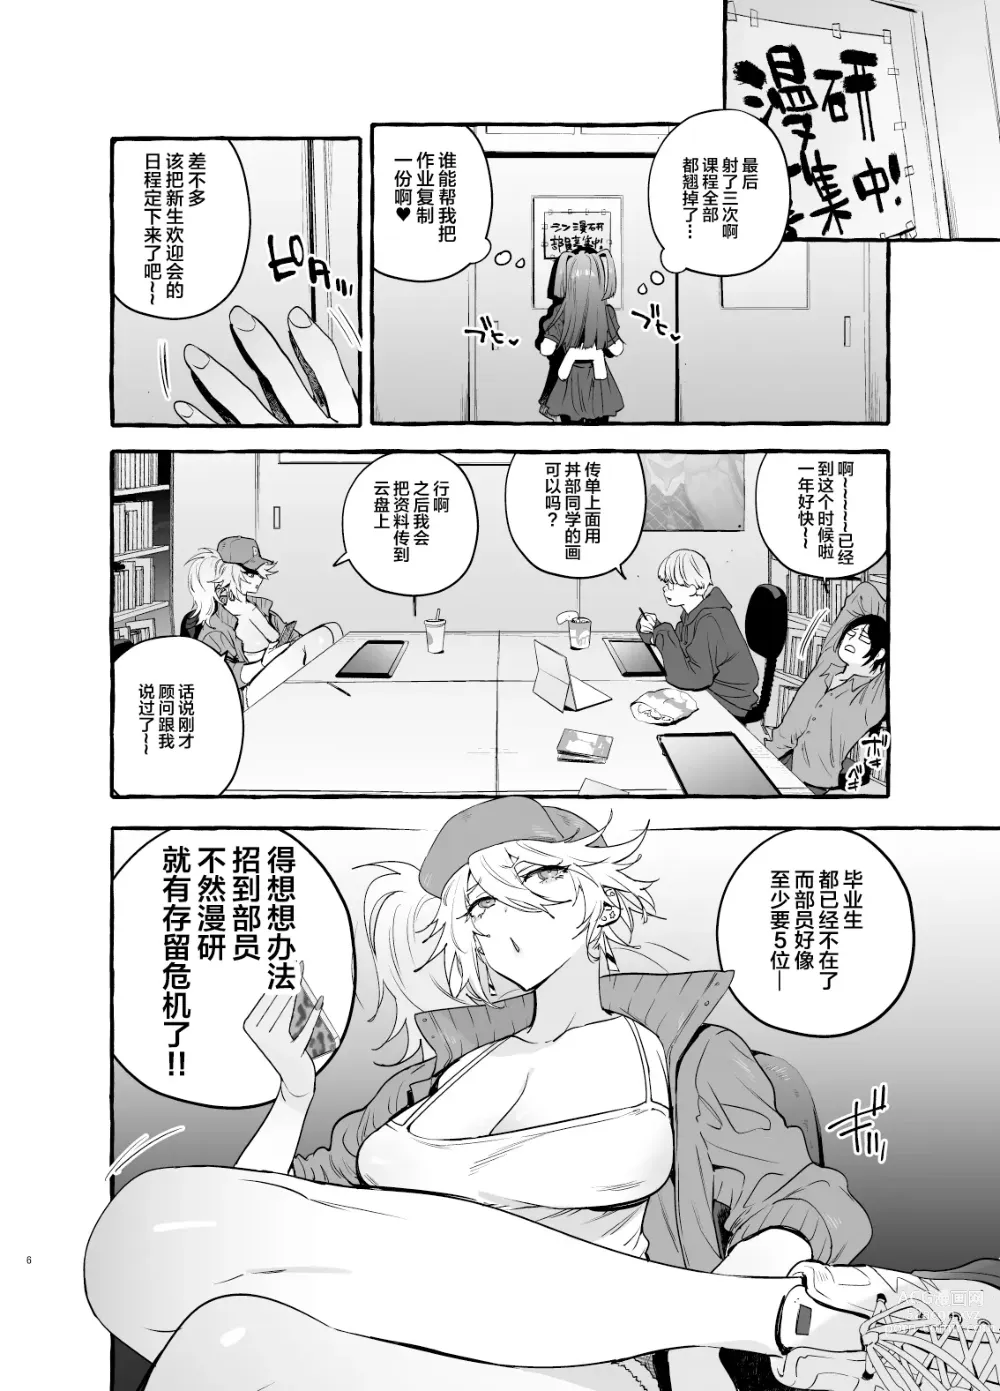 Page 8 of doujinshi Wotasa no Gyaru VS Jirai Otoko